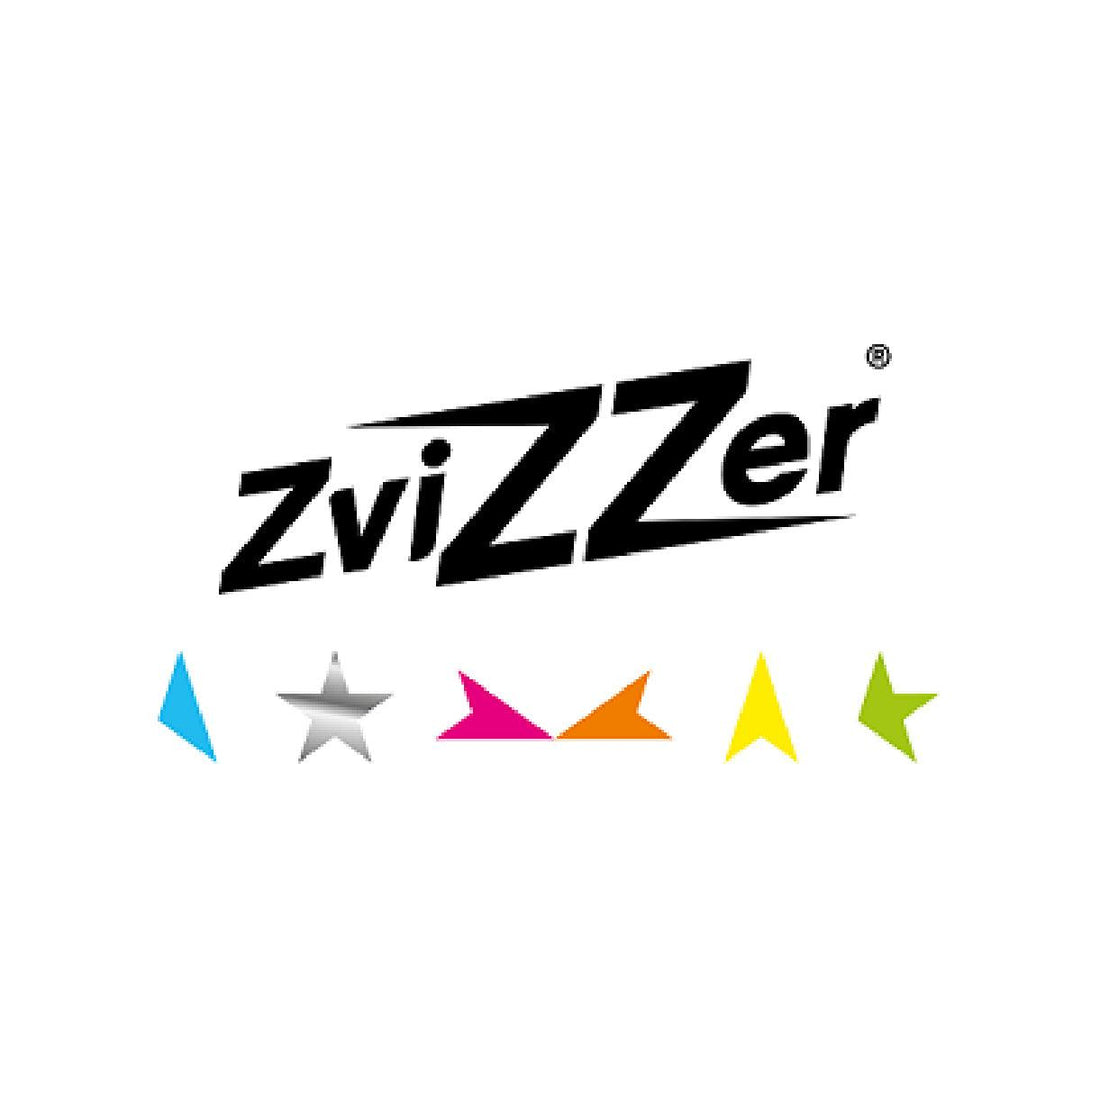  Zvizzer - AllSpeeddrive Shop